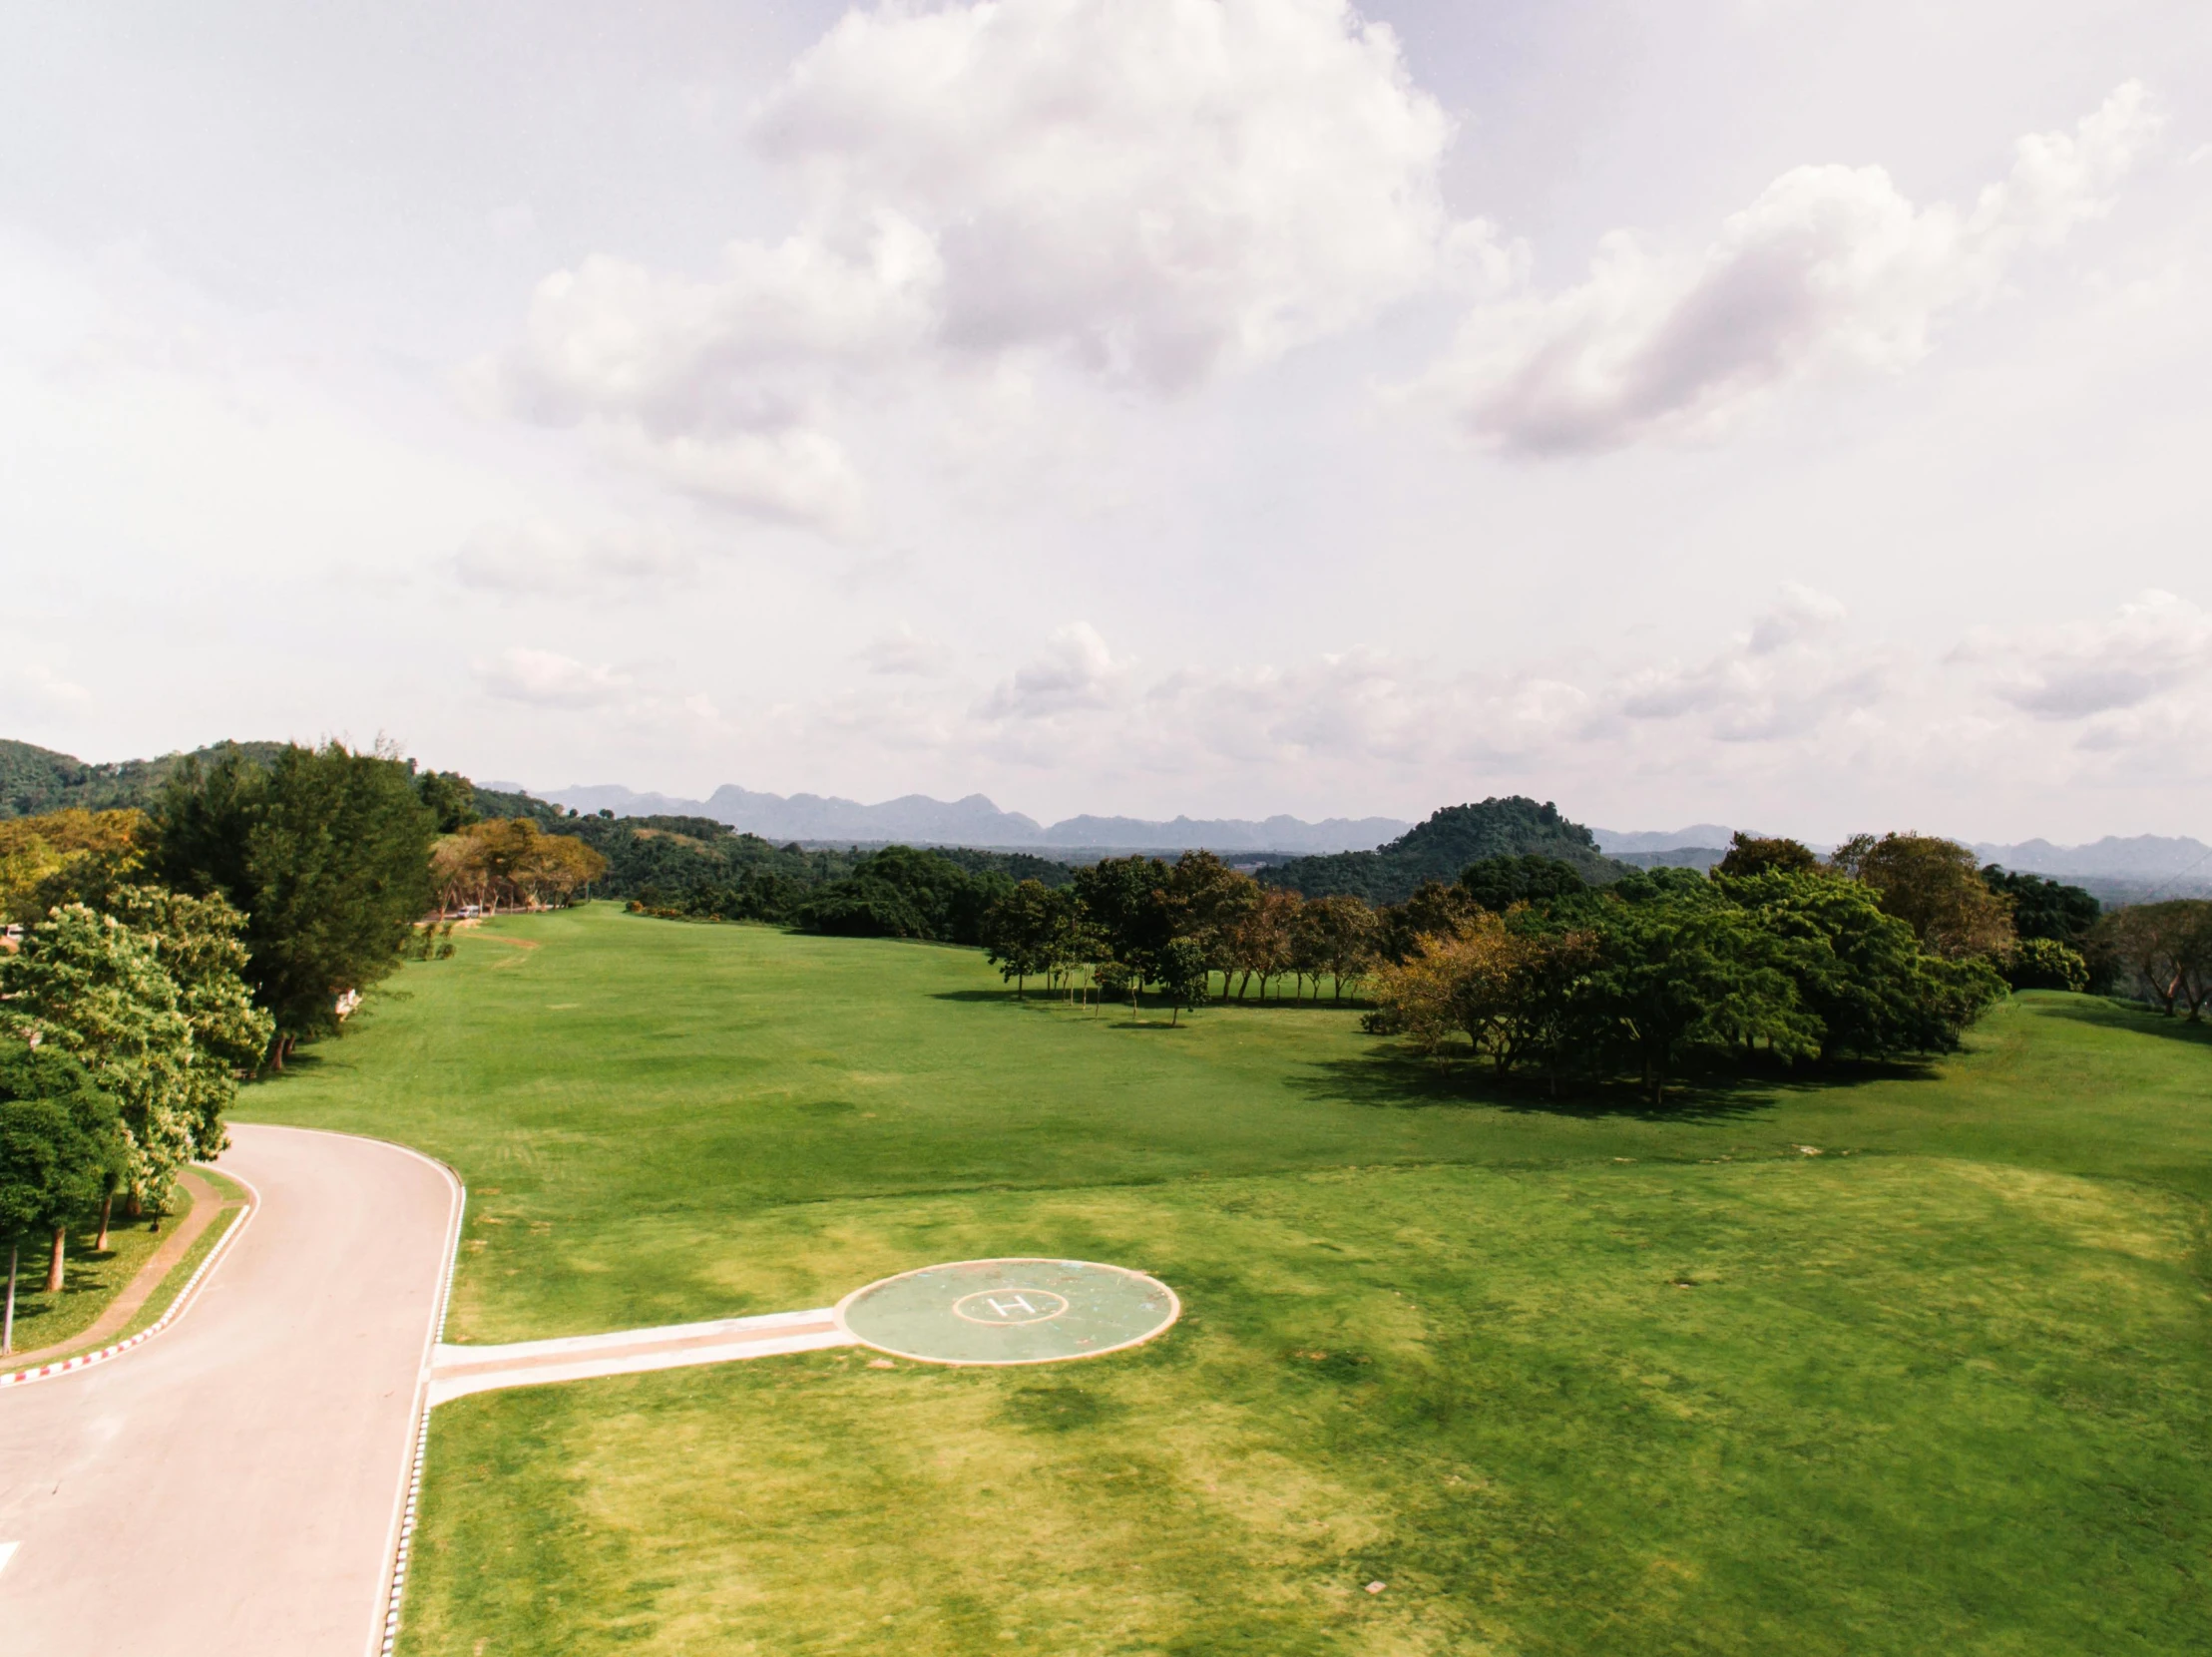 a bird's eye view of a golf course, an album cover, pexels contest winner, realism, sangyeob park, wide long view, sri lanka, helipad